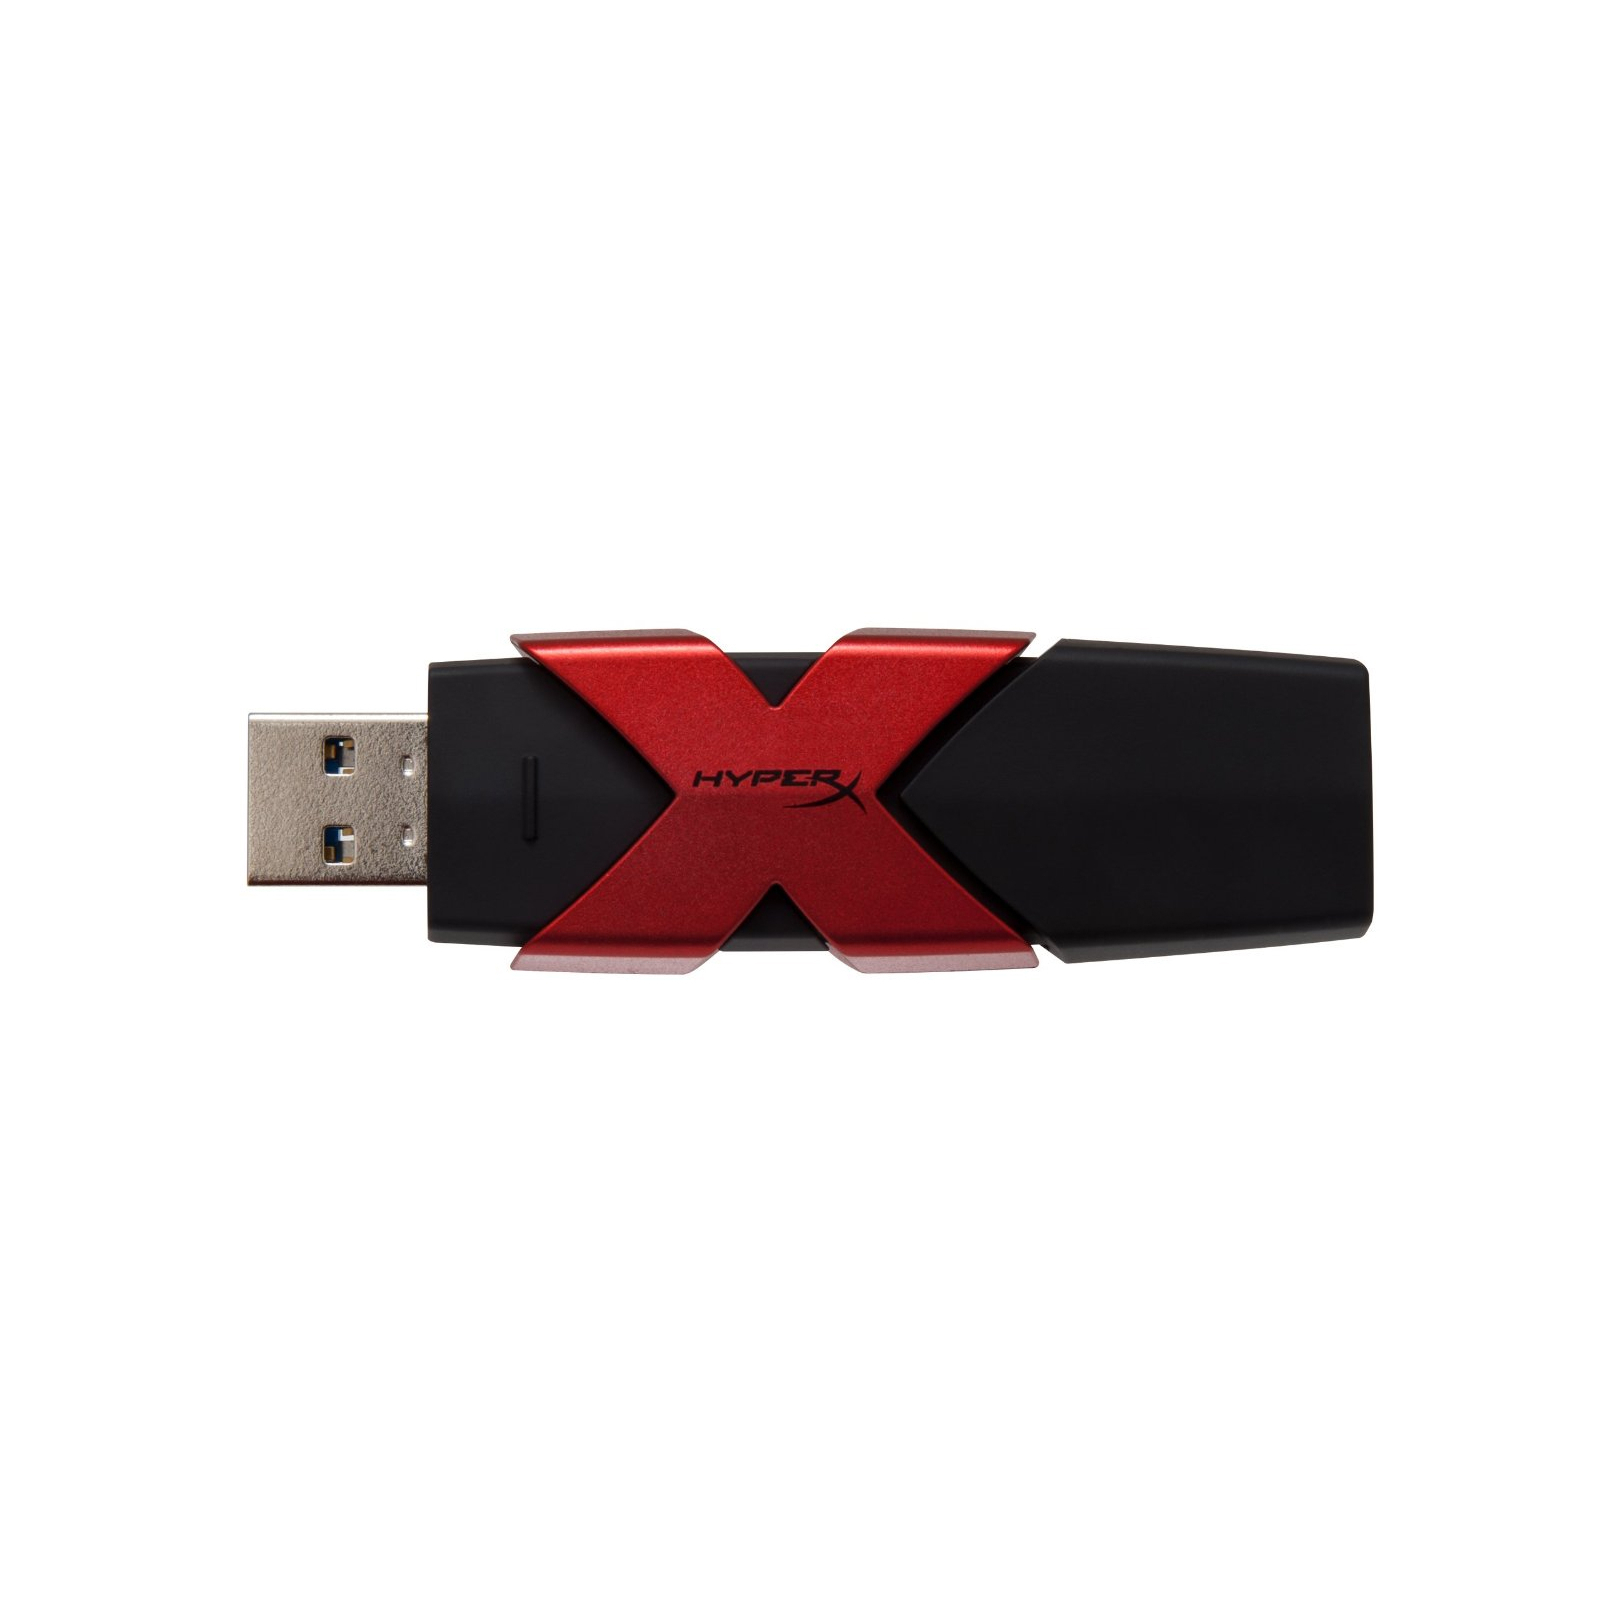 USB флеш накопитель Kingston 256GB HyperX Savage USB 3.1 (HXS3/256GB) изображение 4